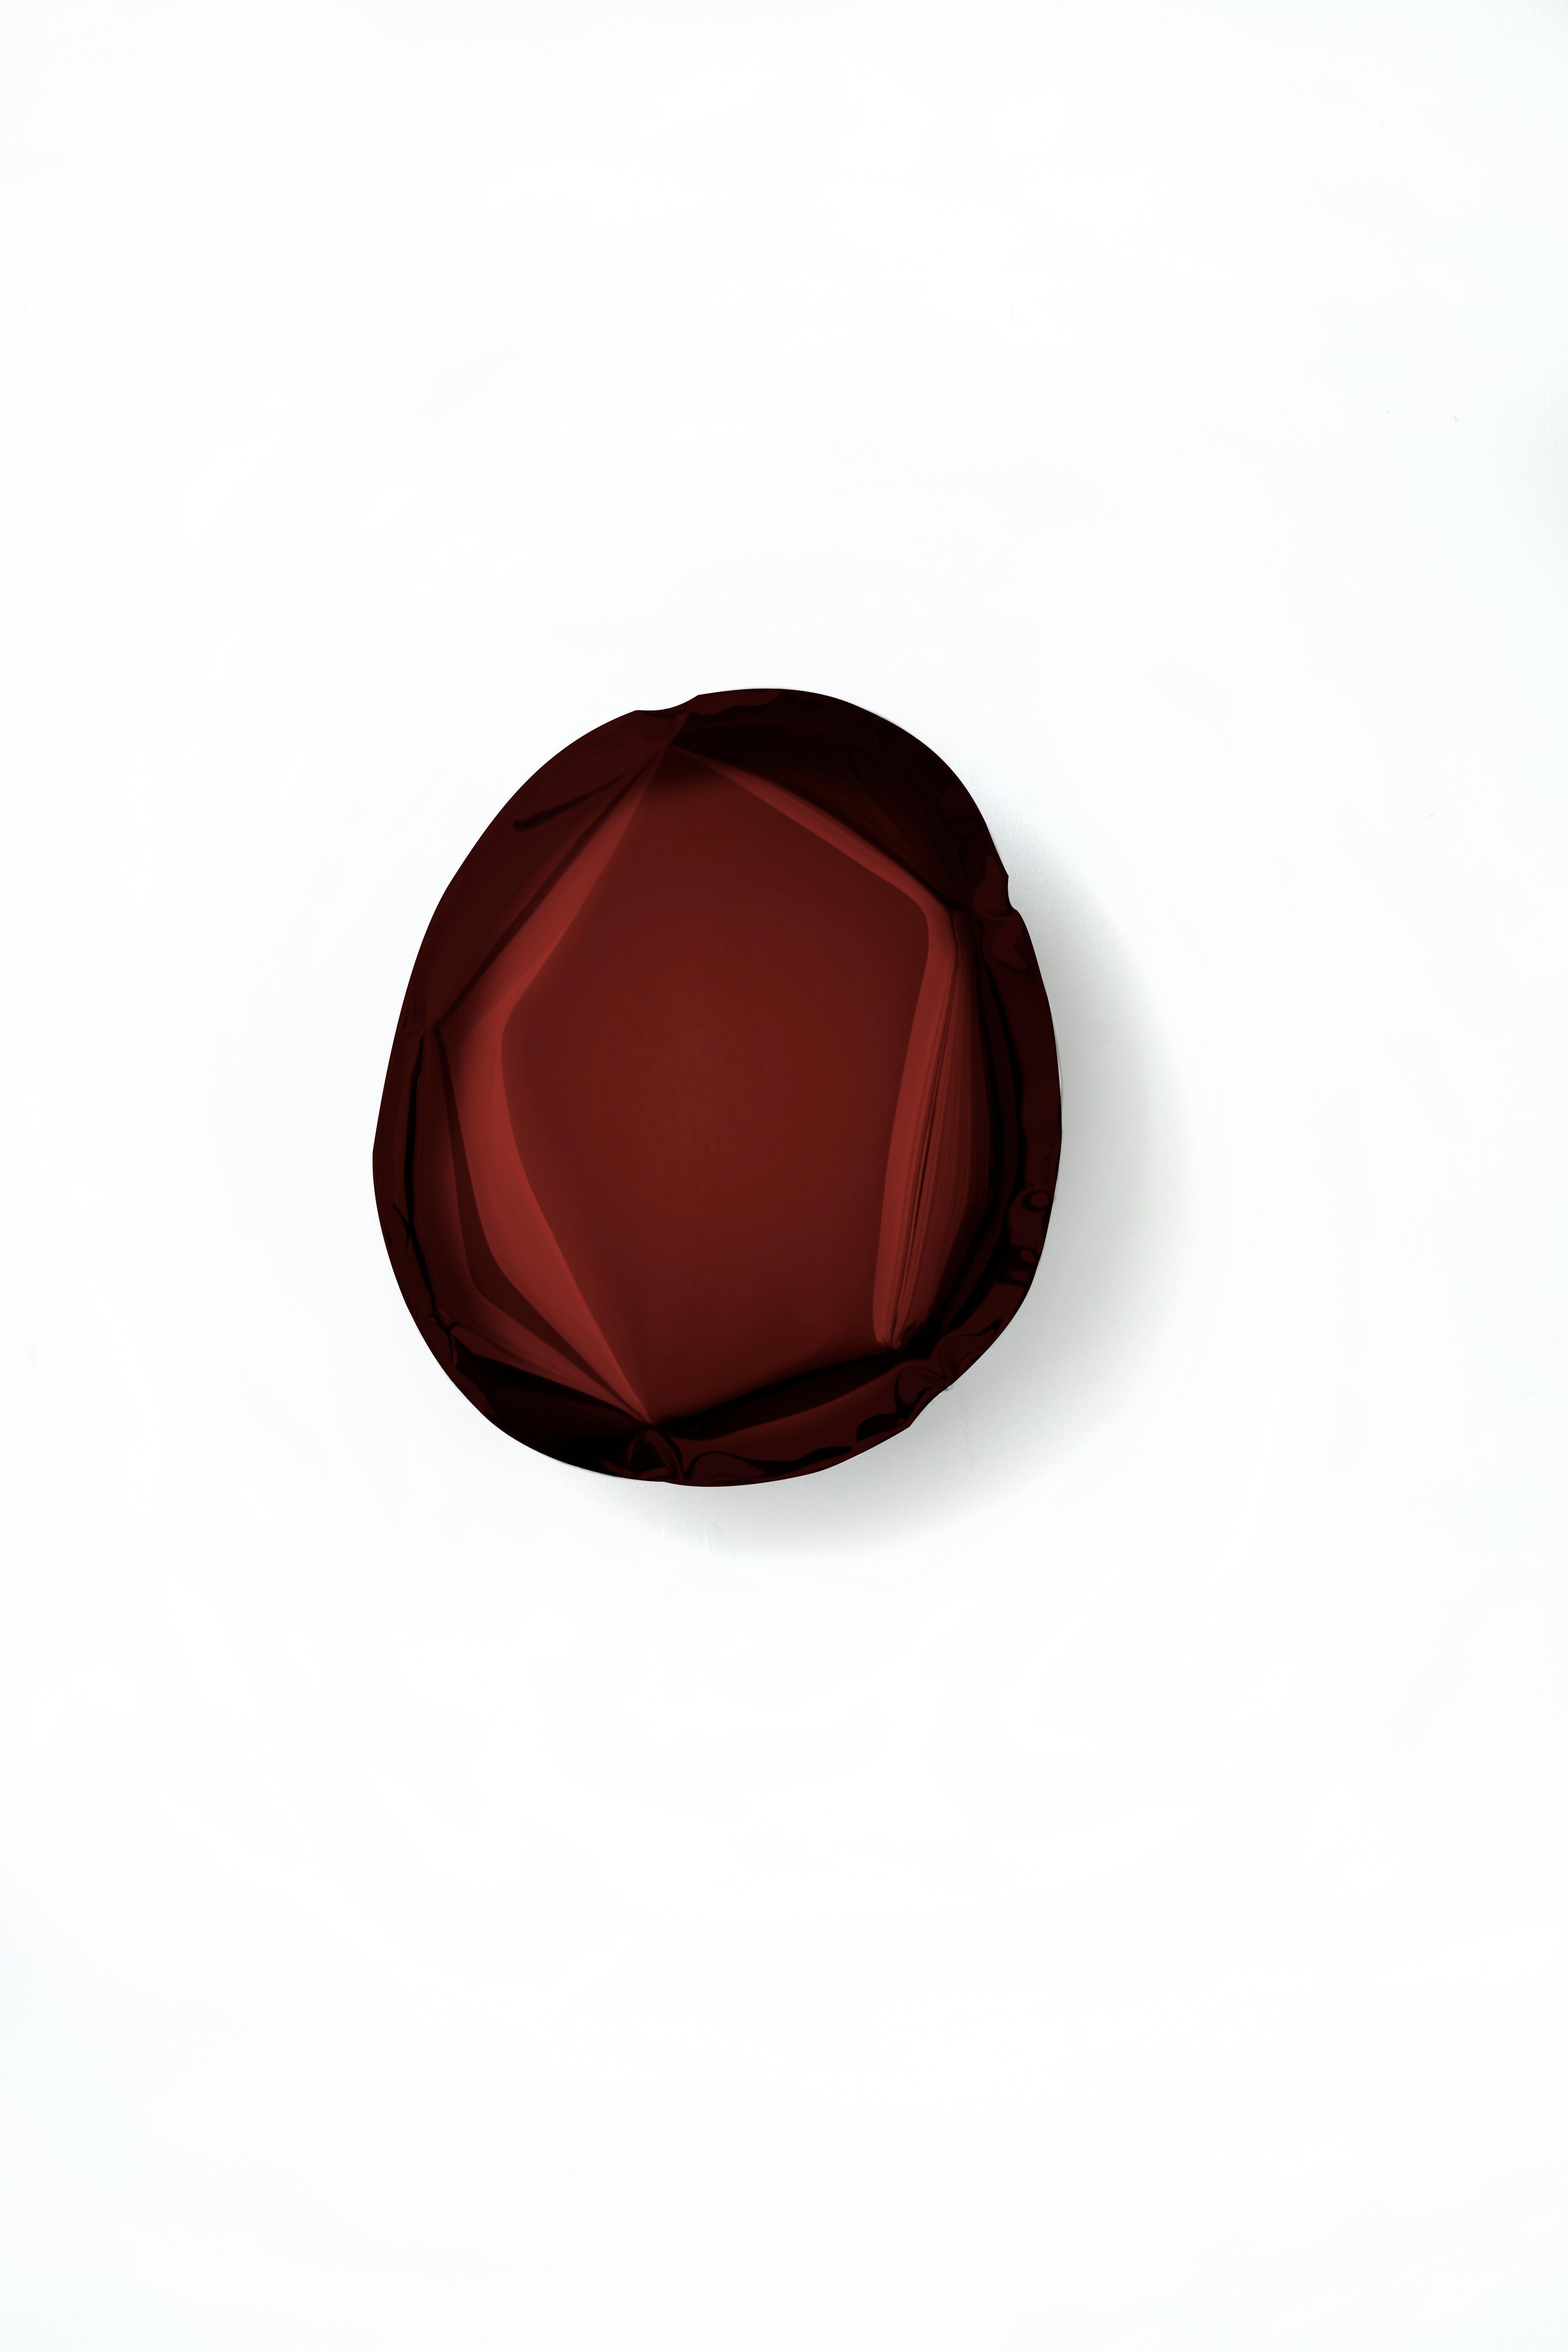 Mirror Tafla O3 Rubin Red, in Polished Stainless Steel by Zieta For Sale 2